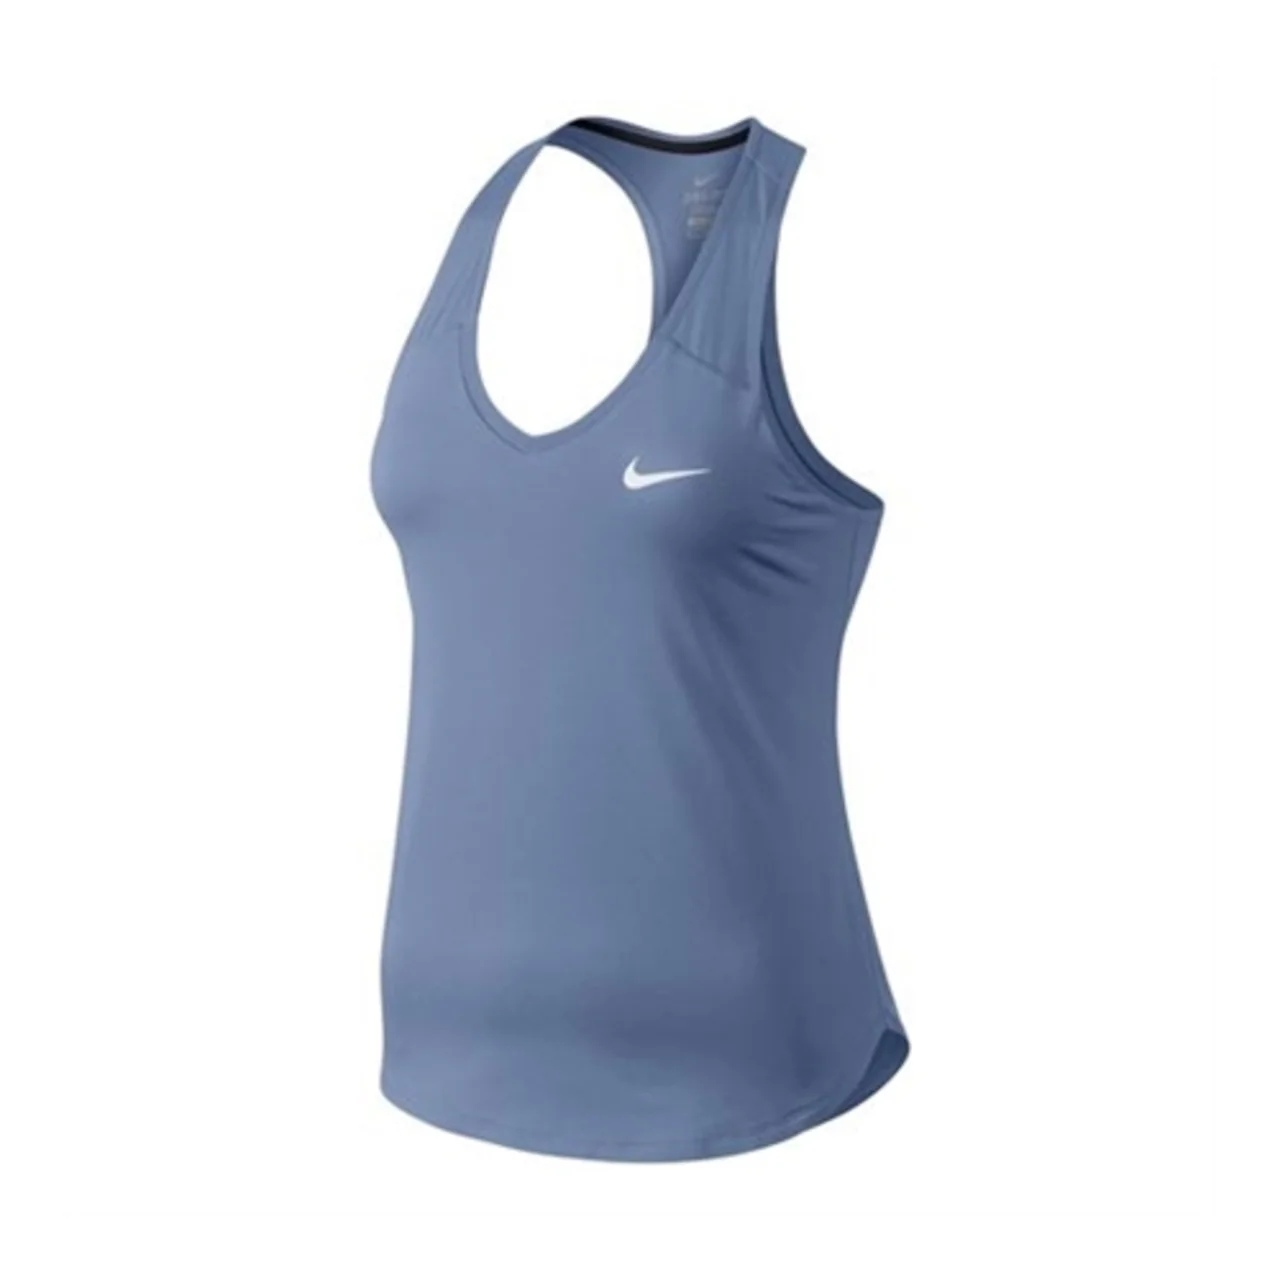 Nike Pure Tank Grey/Blue